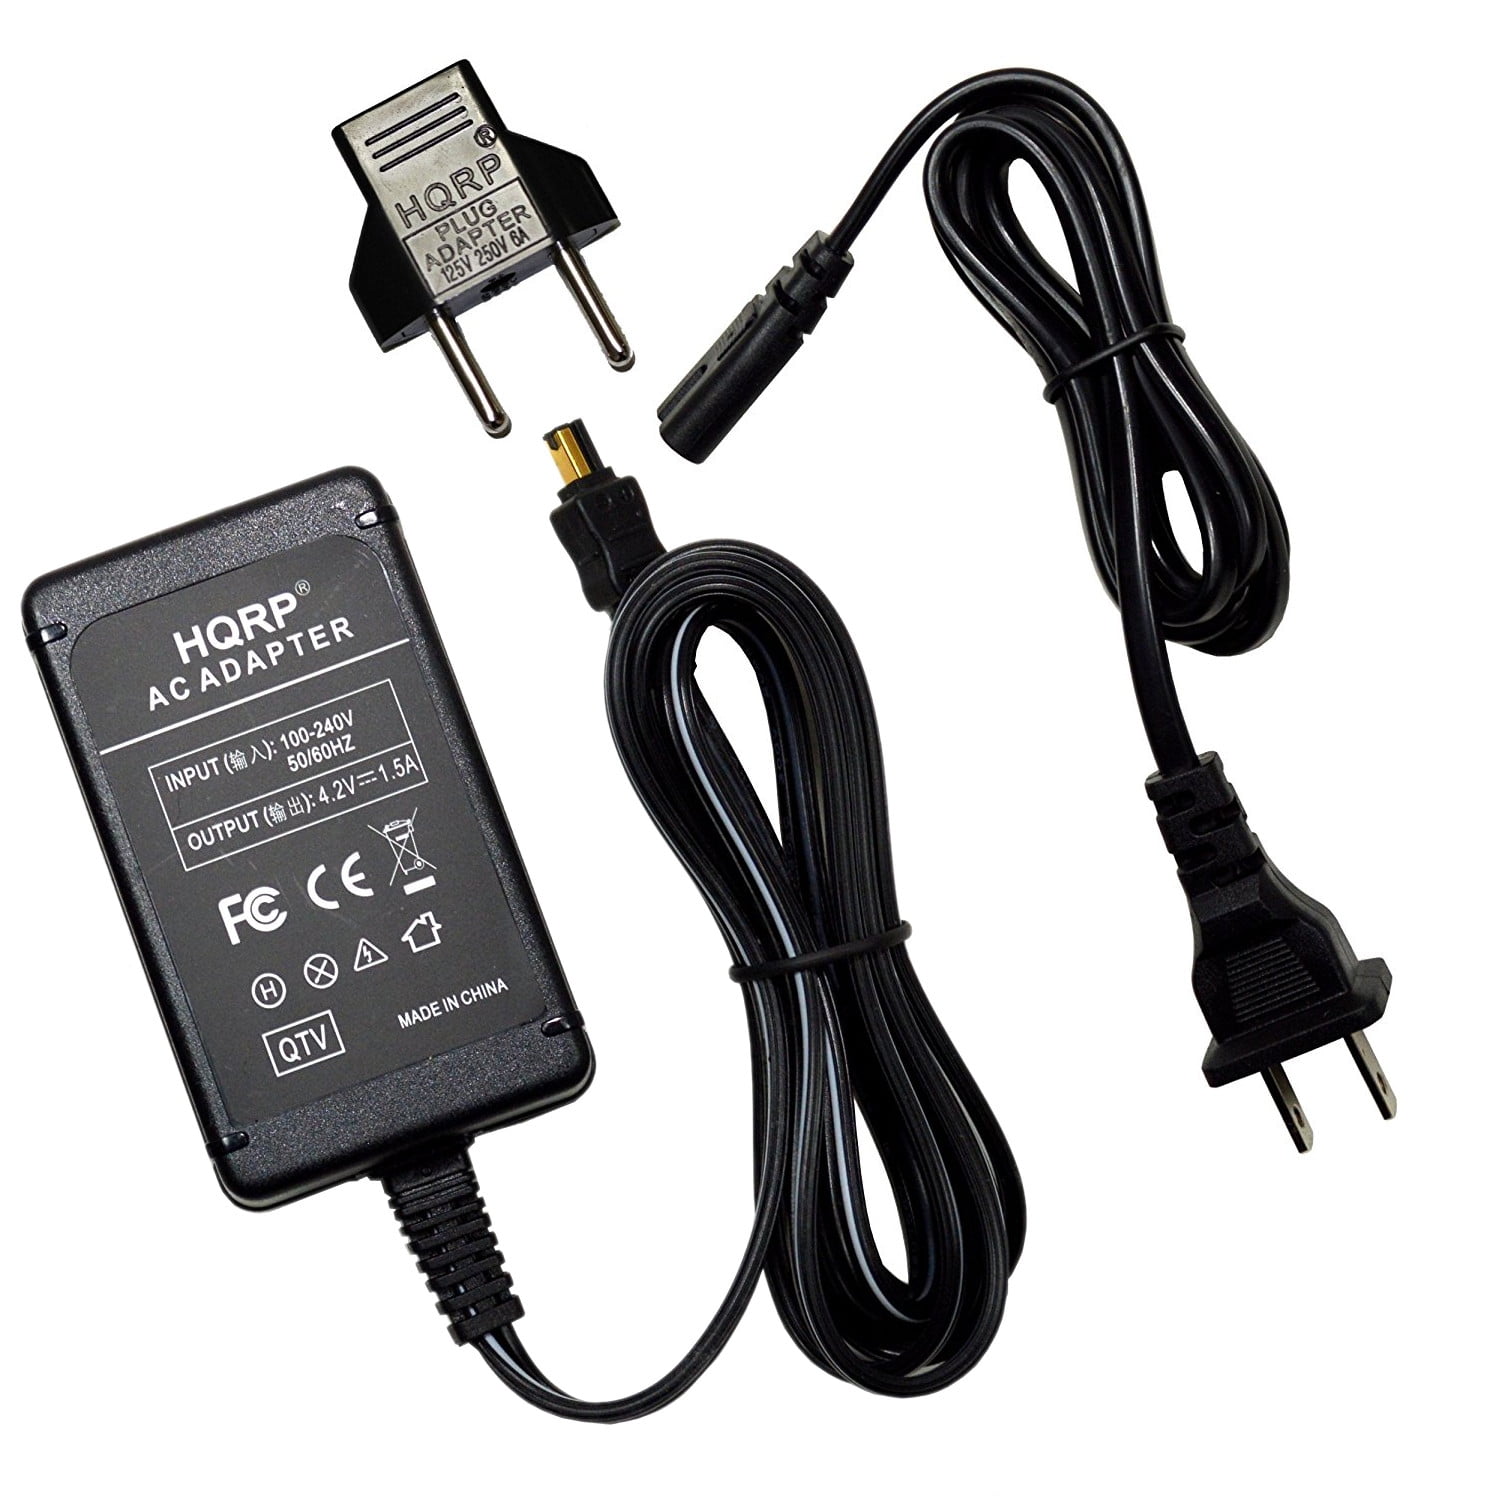 Euro Plug Adapter HQRP AC Adapter Compatible with Tripp Lite U225-004-R U360-412 U222-010-R USB Hub Power Supply Cord 